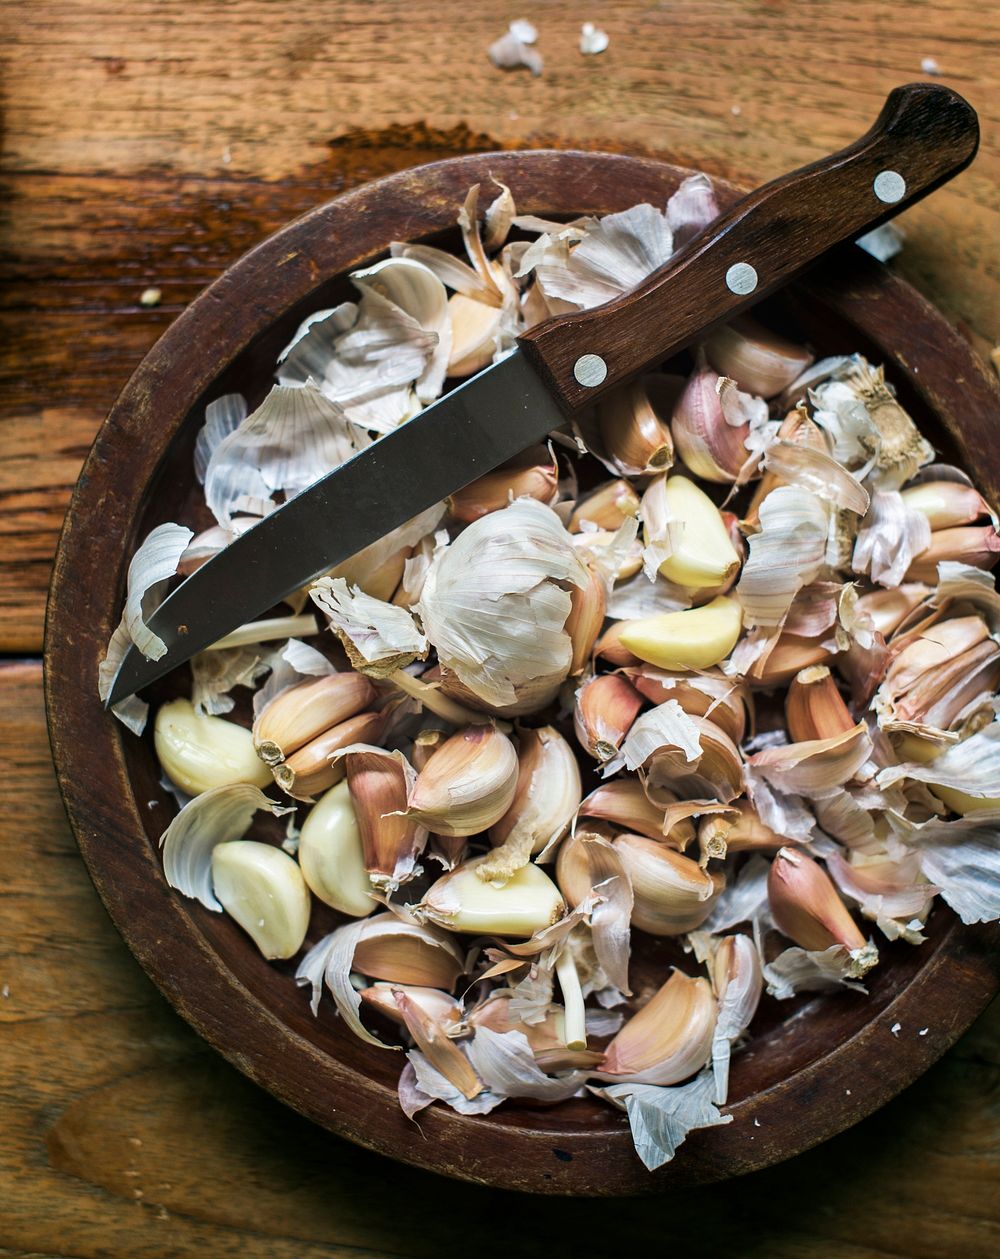 Cloves garlic on a wooden plate